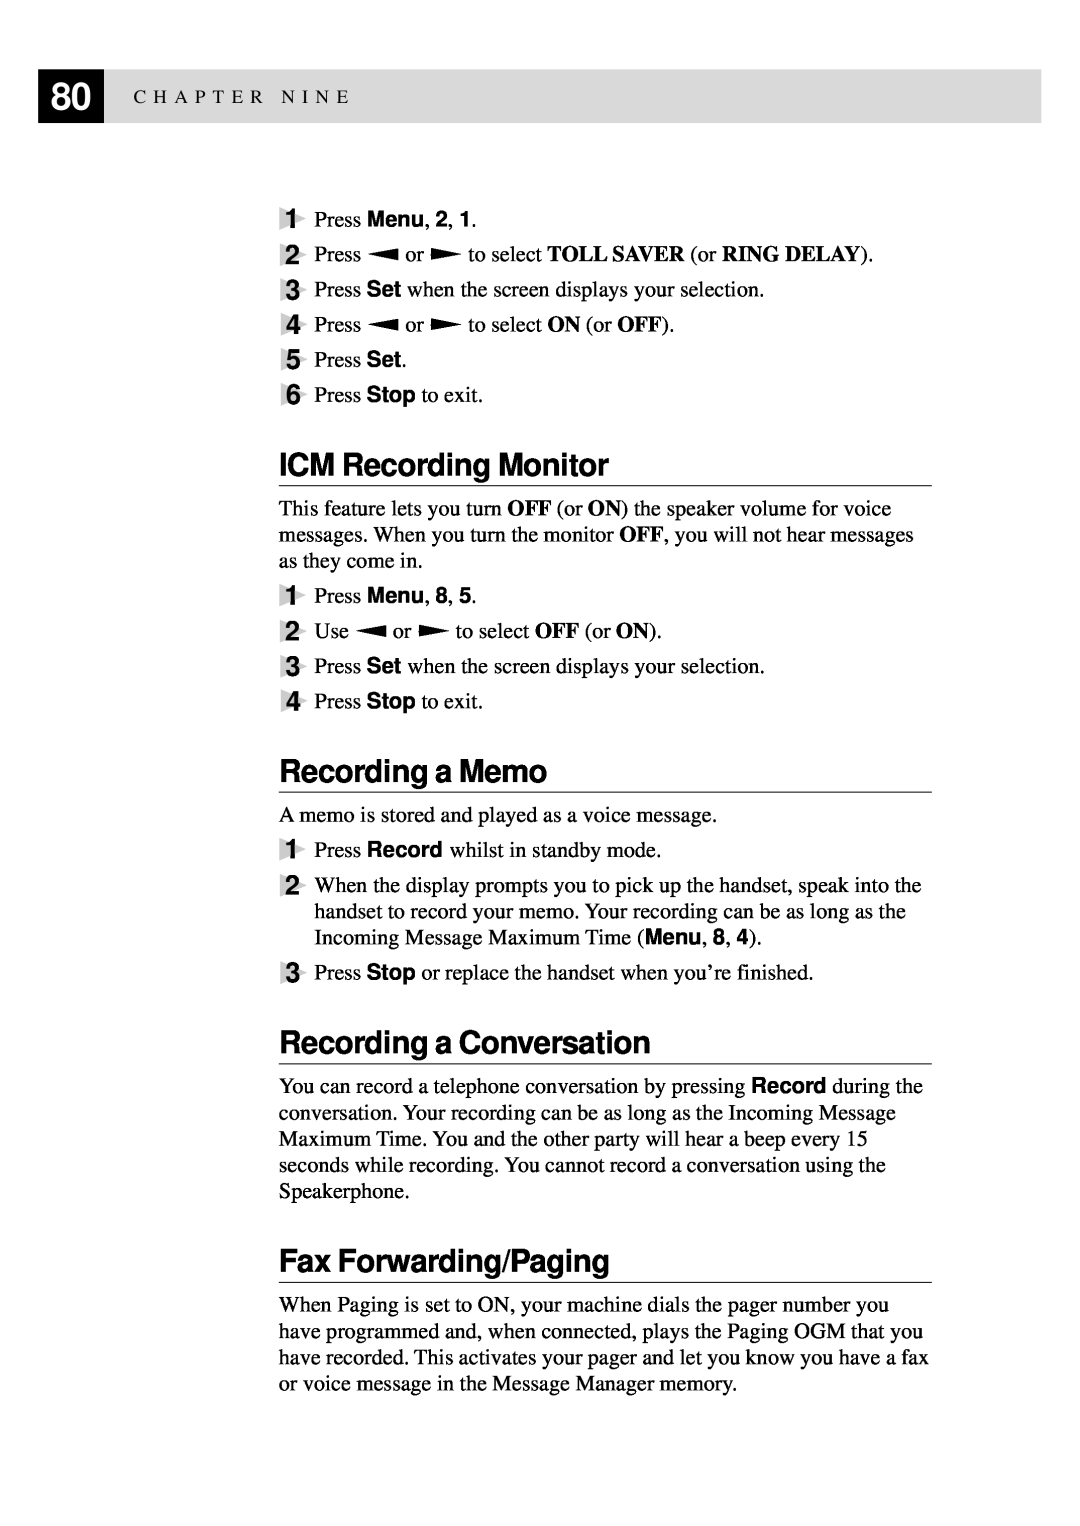 Brother 515 manual ICM Recording Monitor, Recording a Memo, Recording a Conversation, Fax Forwarding/Paging 